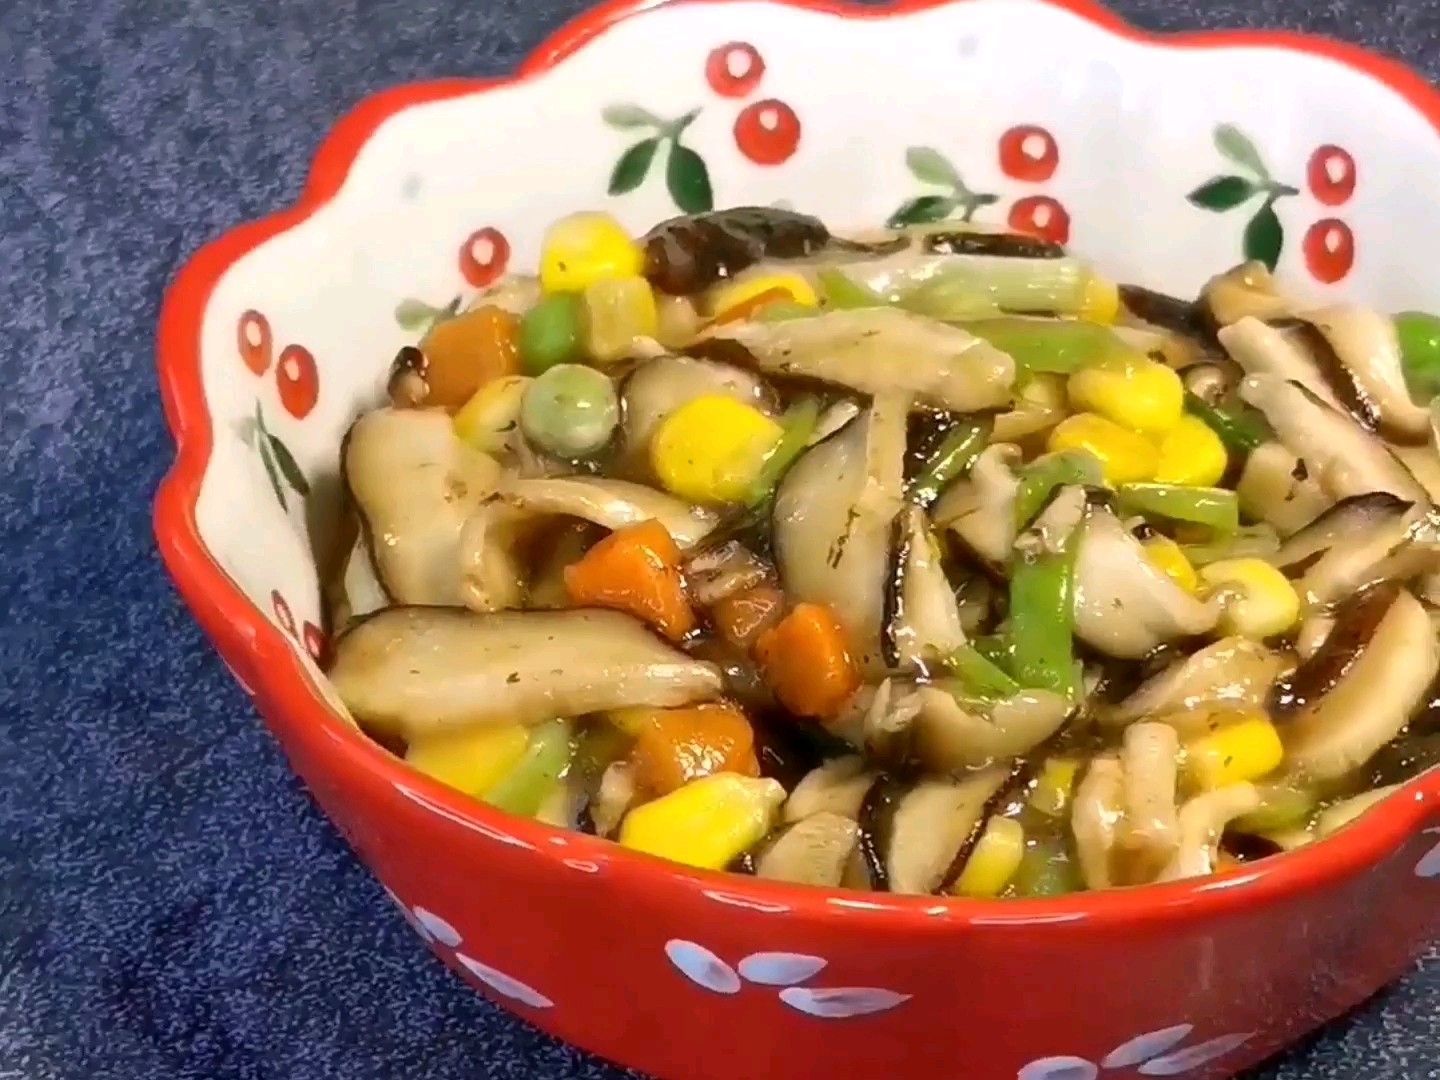 Stir-fried Vegetables with Mushrooms